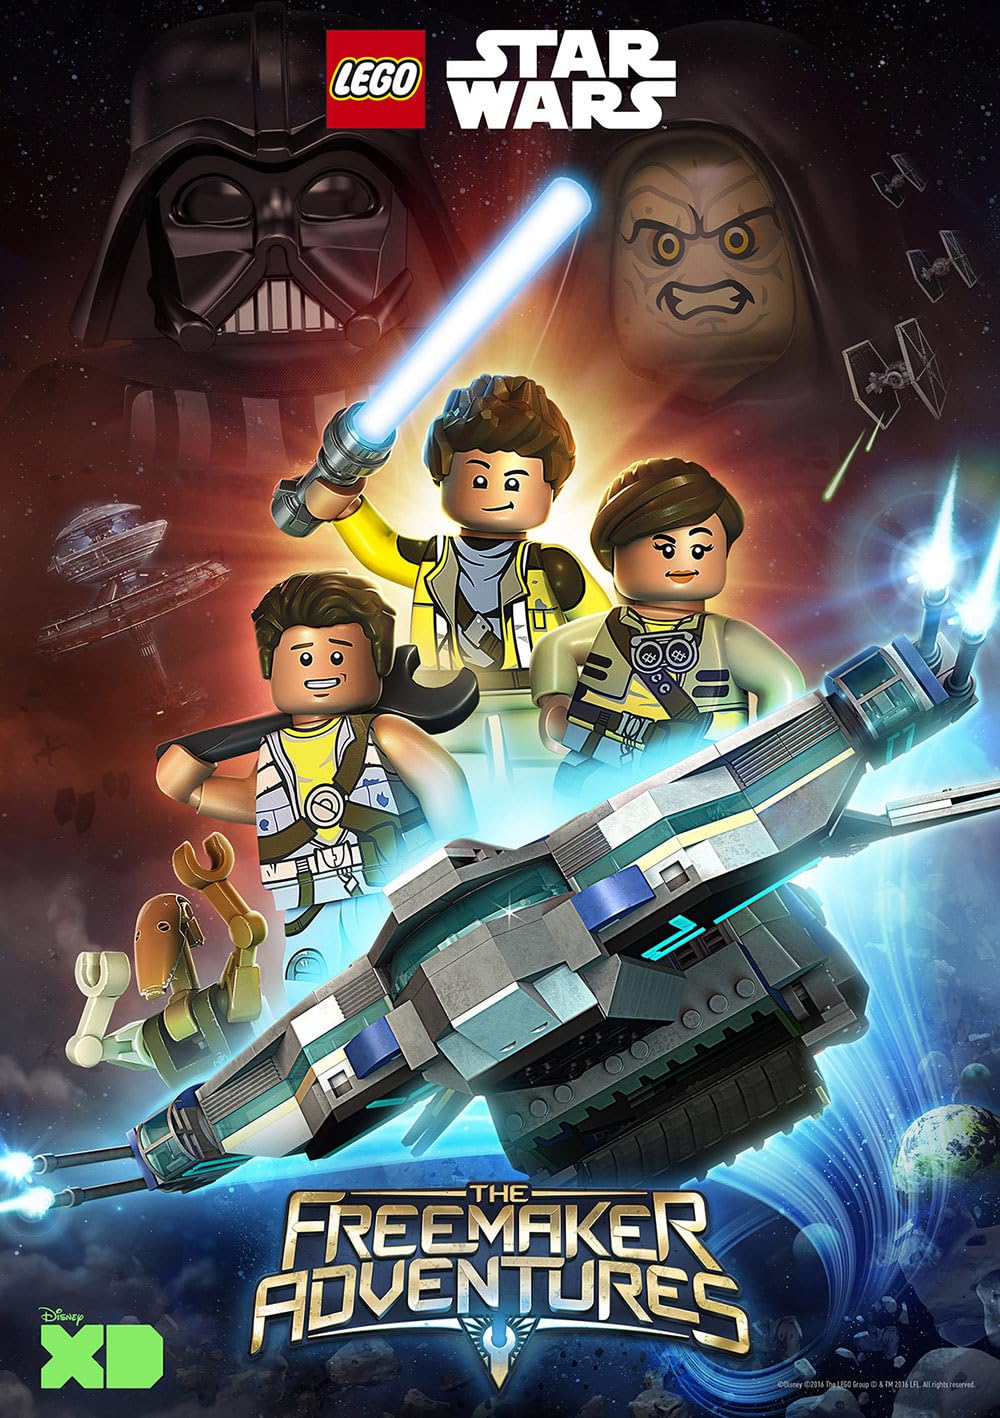 Lego Star Wars: The Freemaker Adventures poster